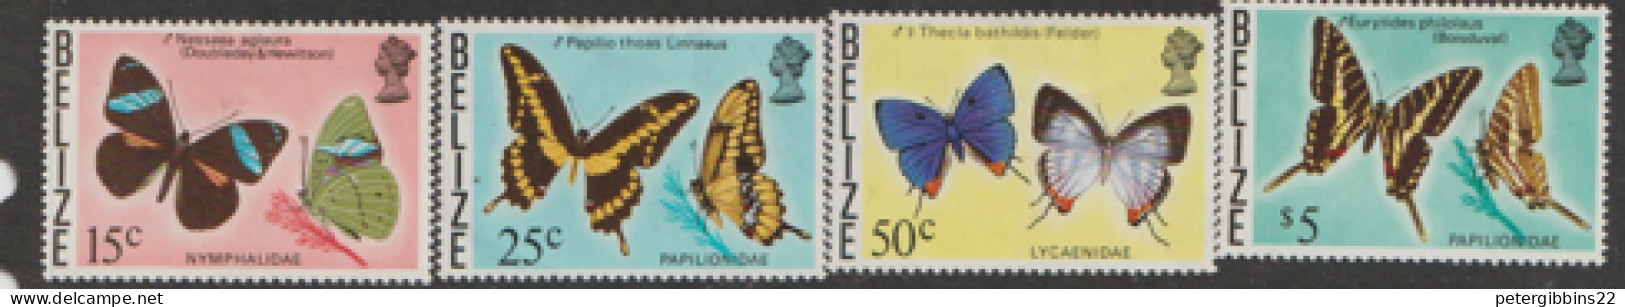 Belize  1979  Butterflies  Various Values Wmk Upright  Mounted Mint - Belize (1973-...)